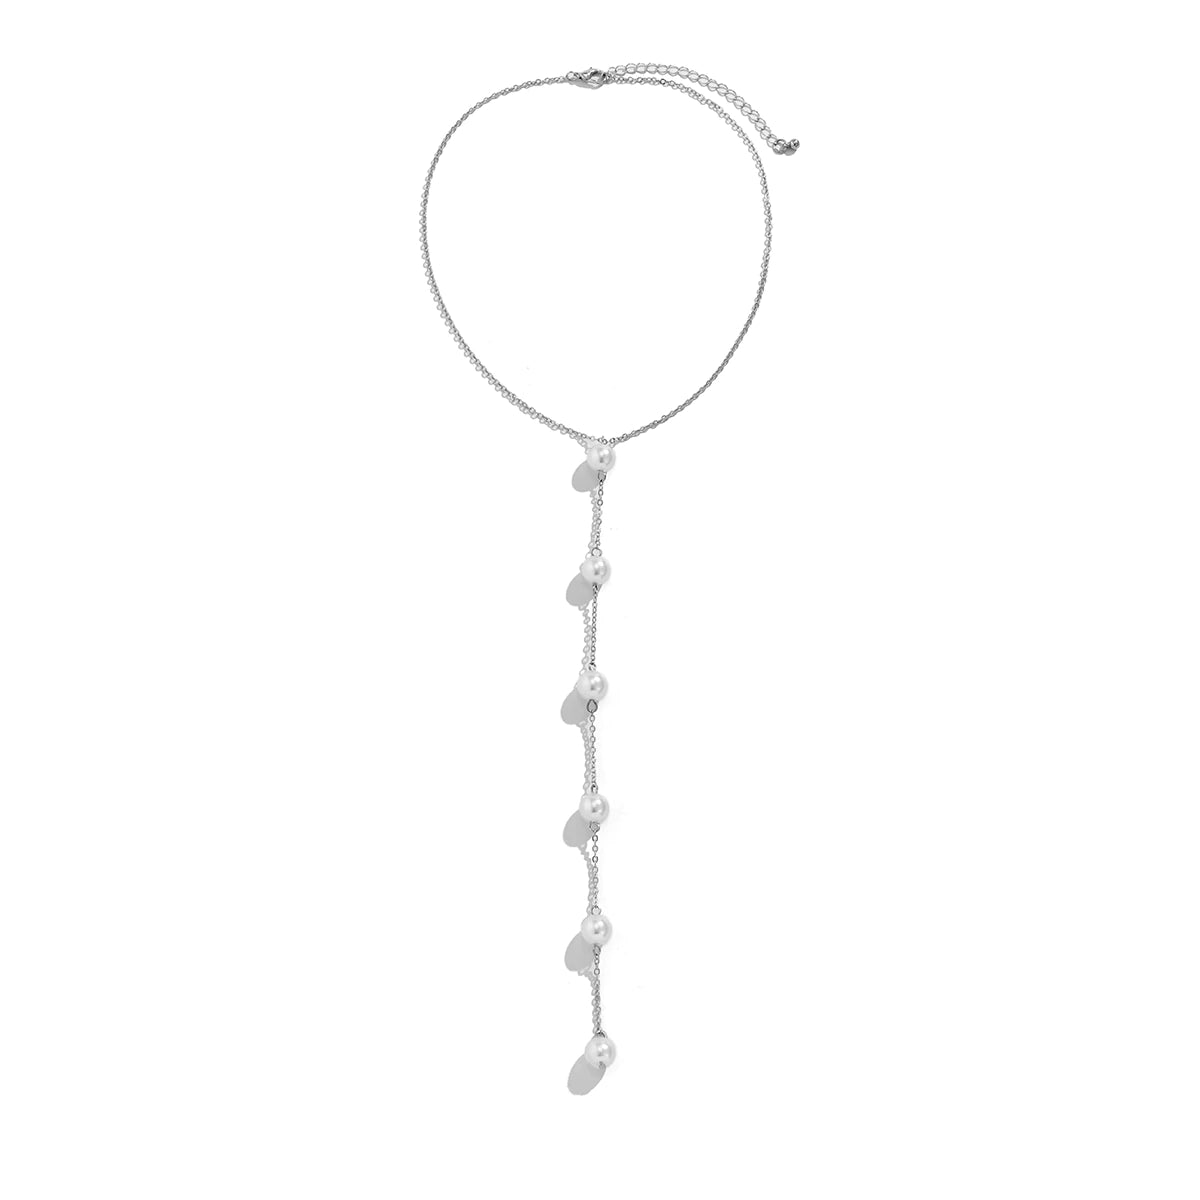 Tassel Pearl Necklace